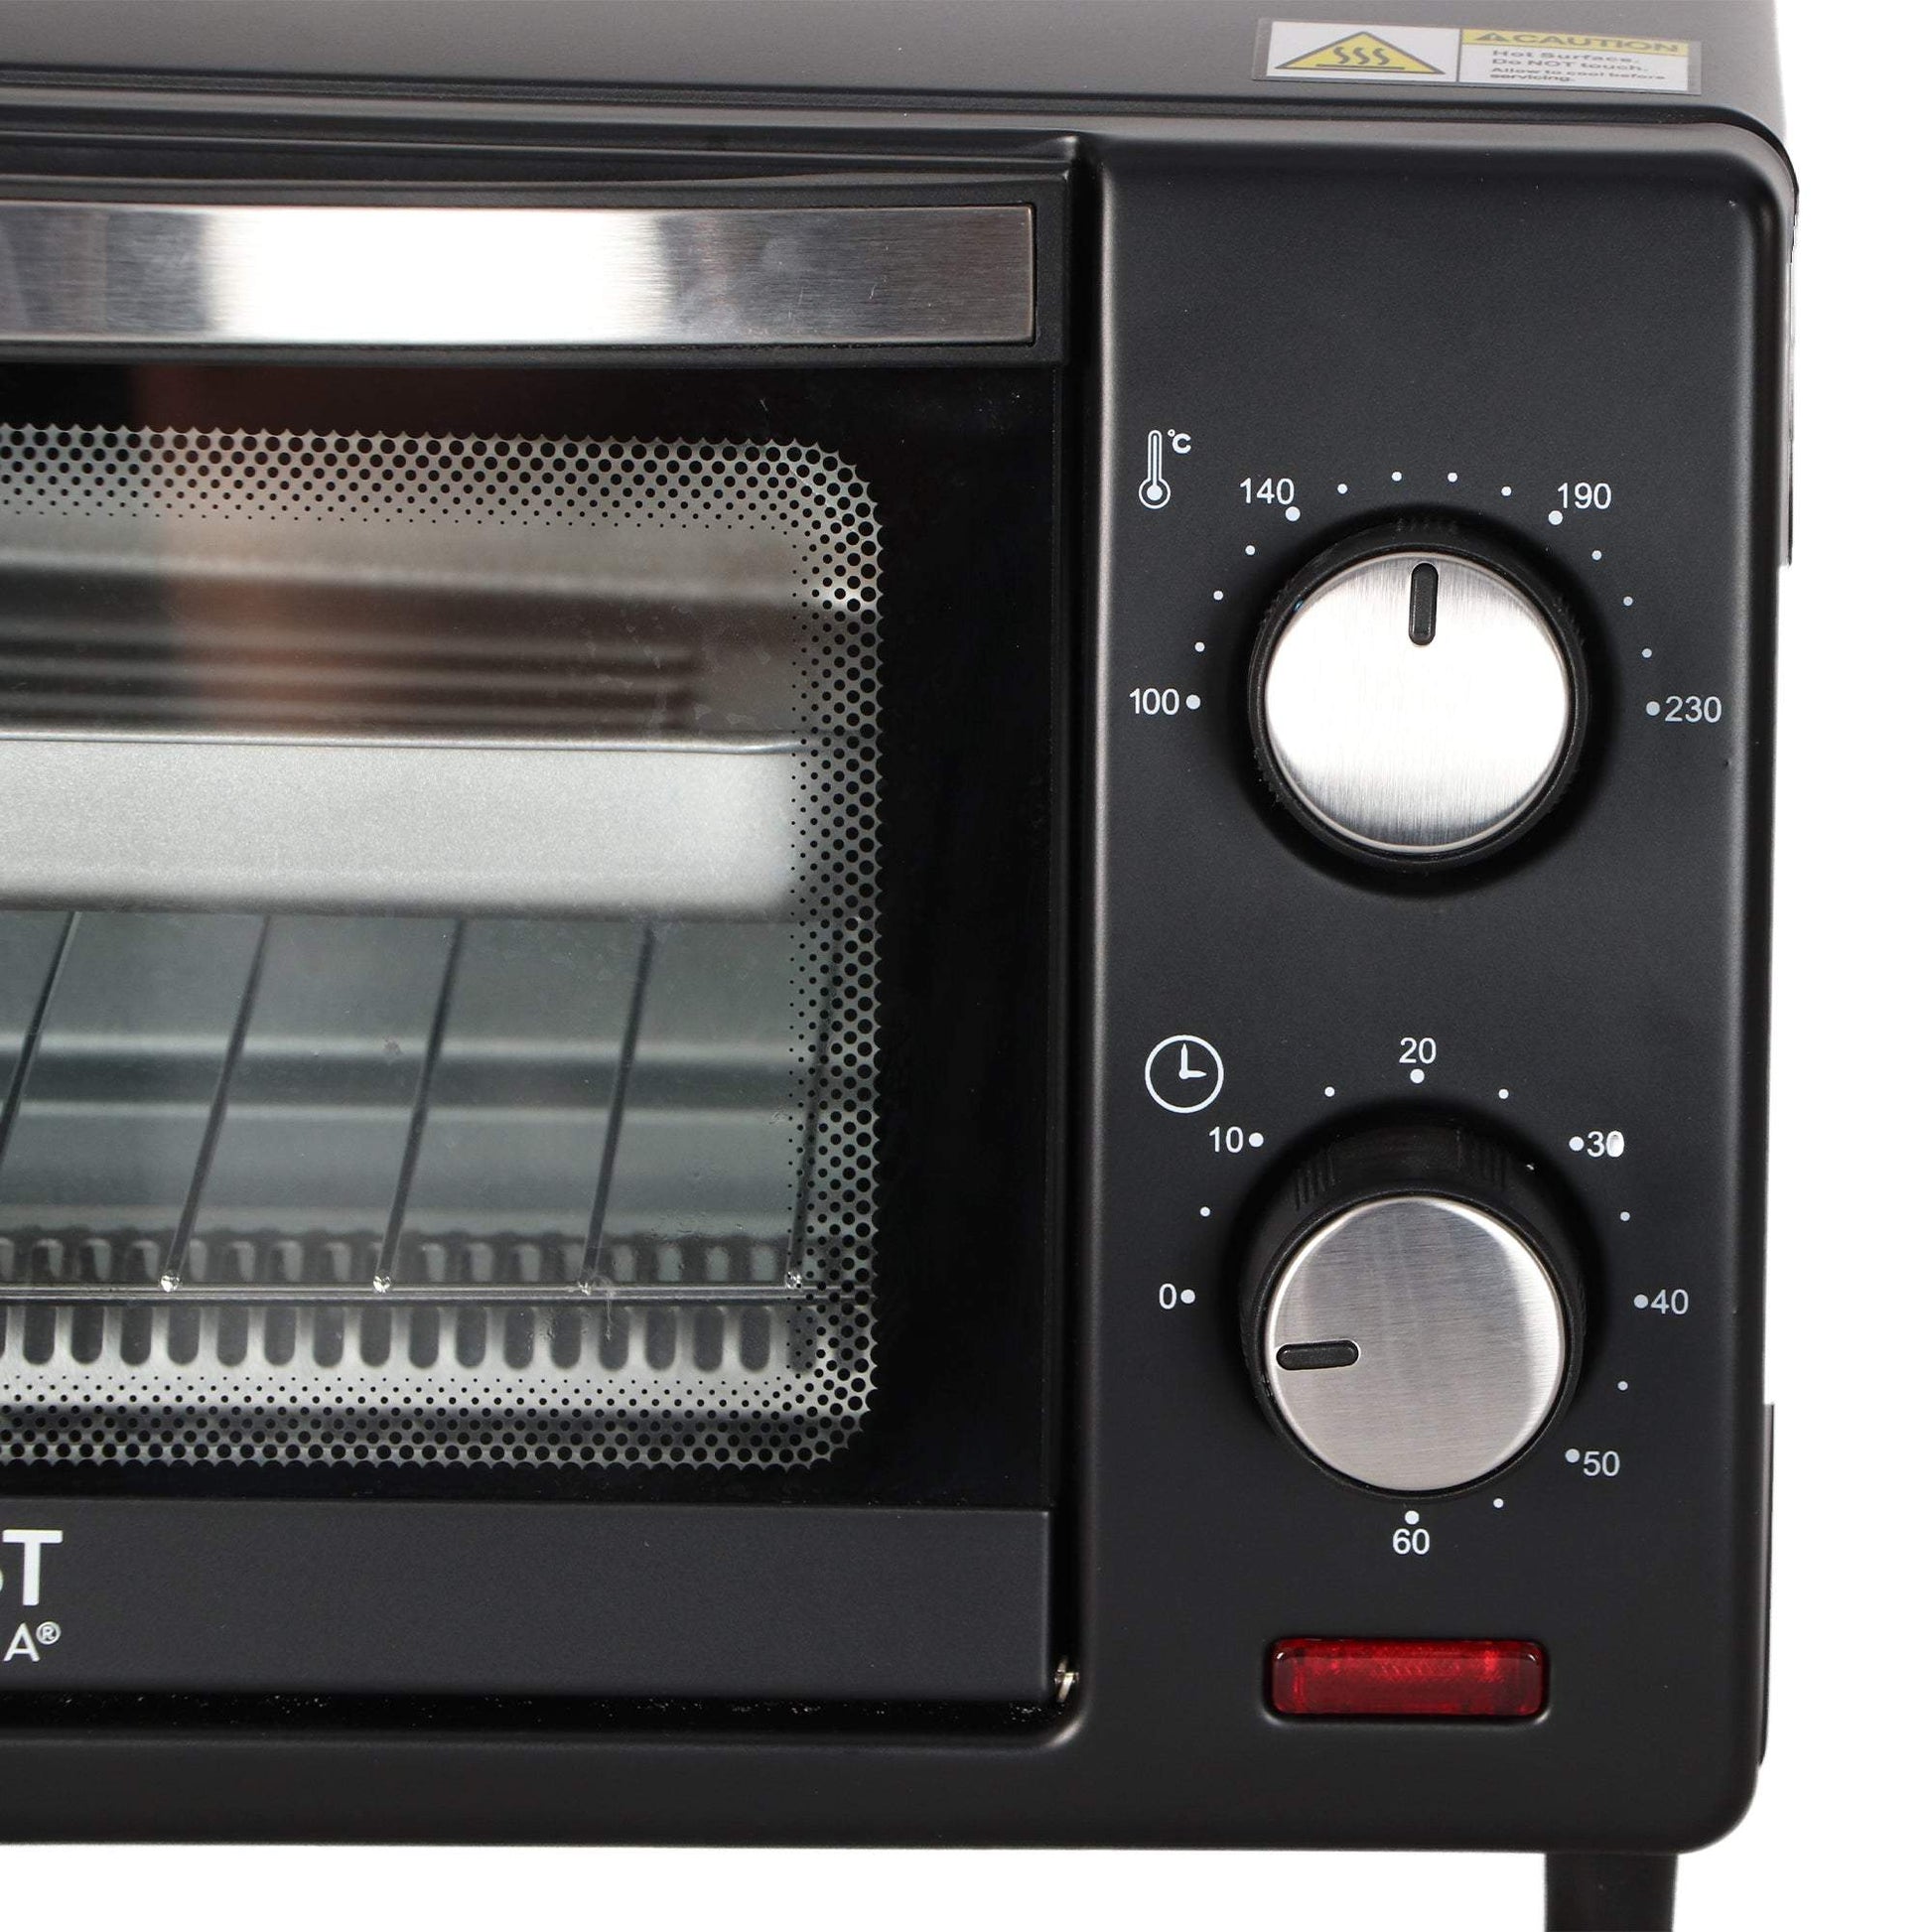 TZS First Mini oven 10 liters | 800 watts | 2 quartz elements-Royal Brands Co-